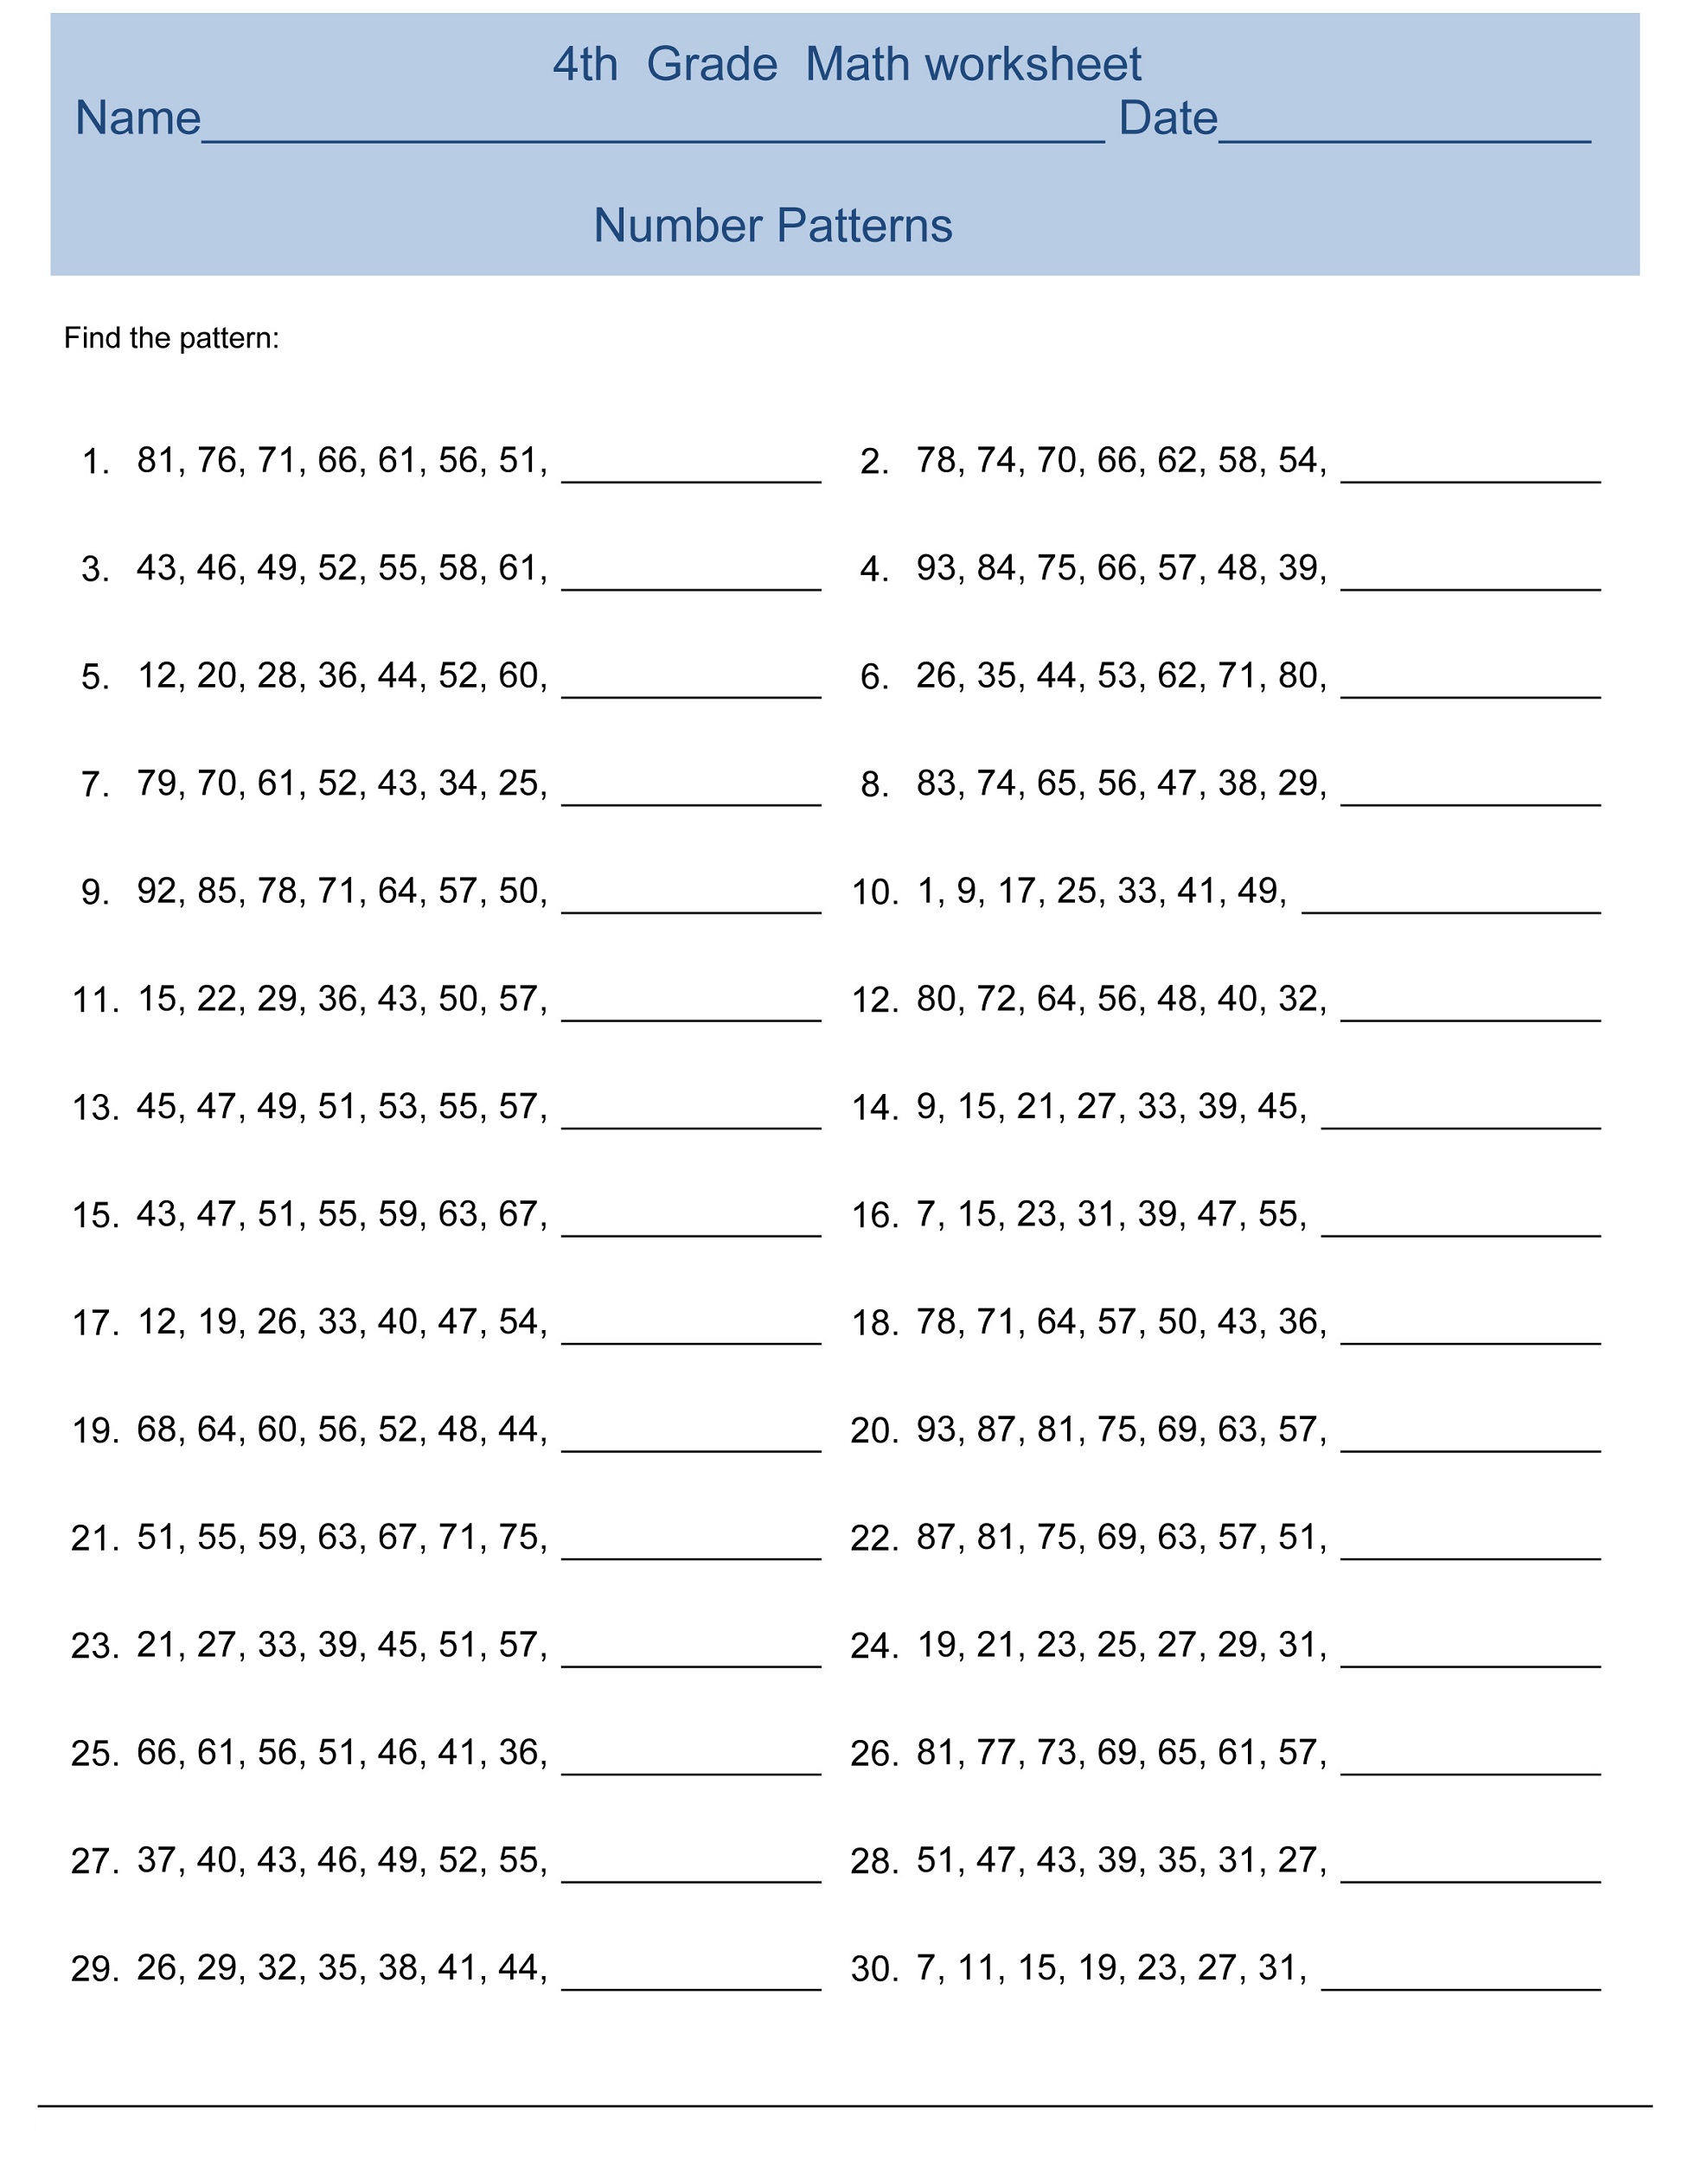 4th-grade-multiplication-worksheets-pdf-times-tables-worksheets-math